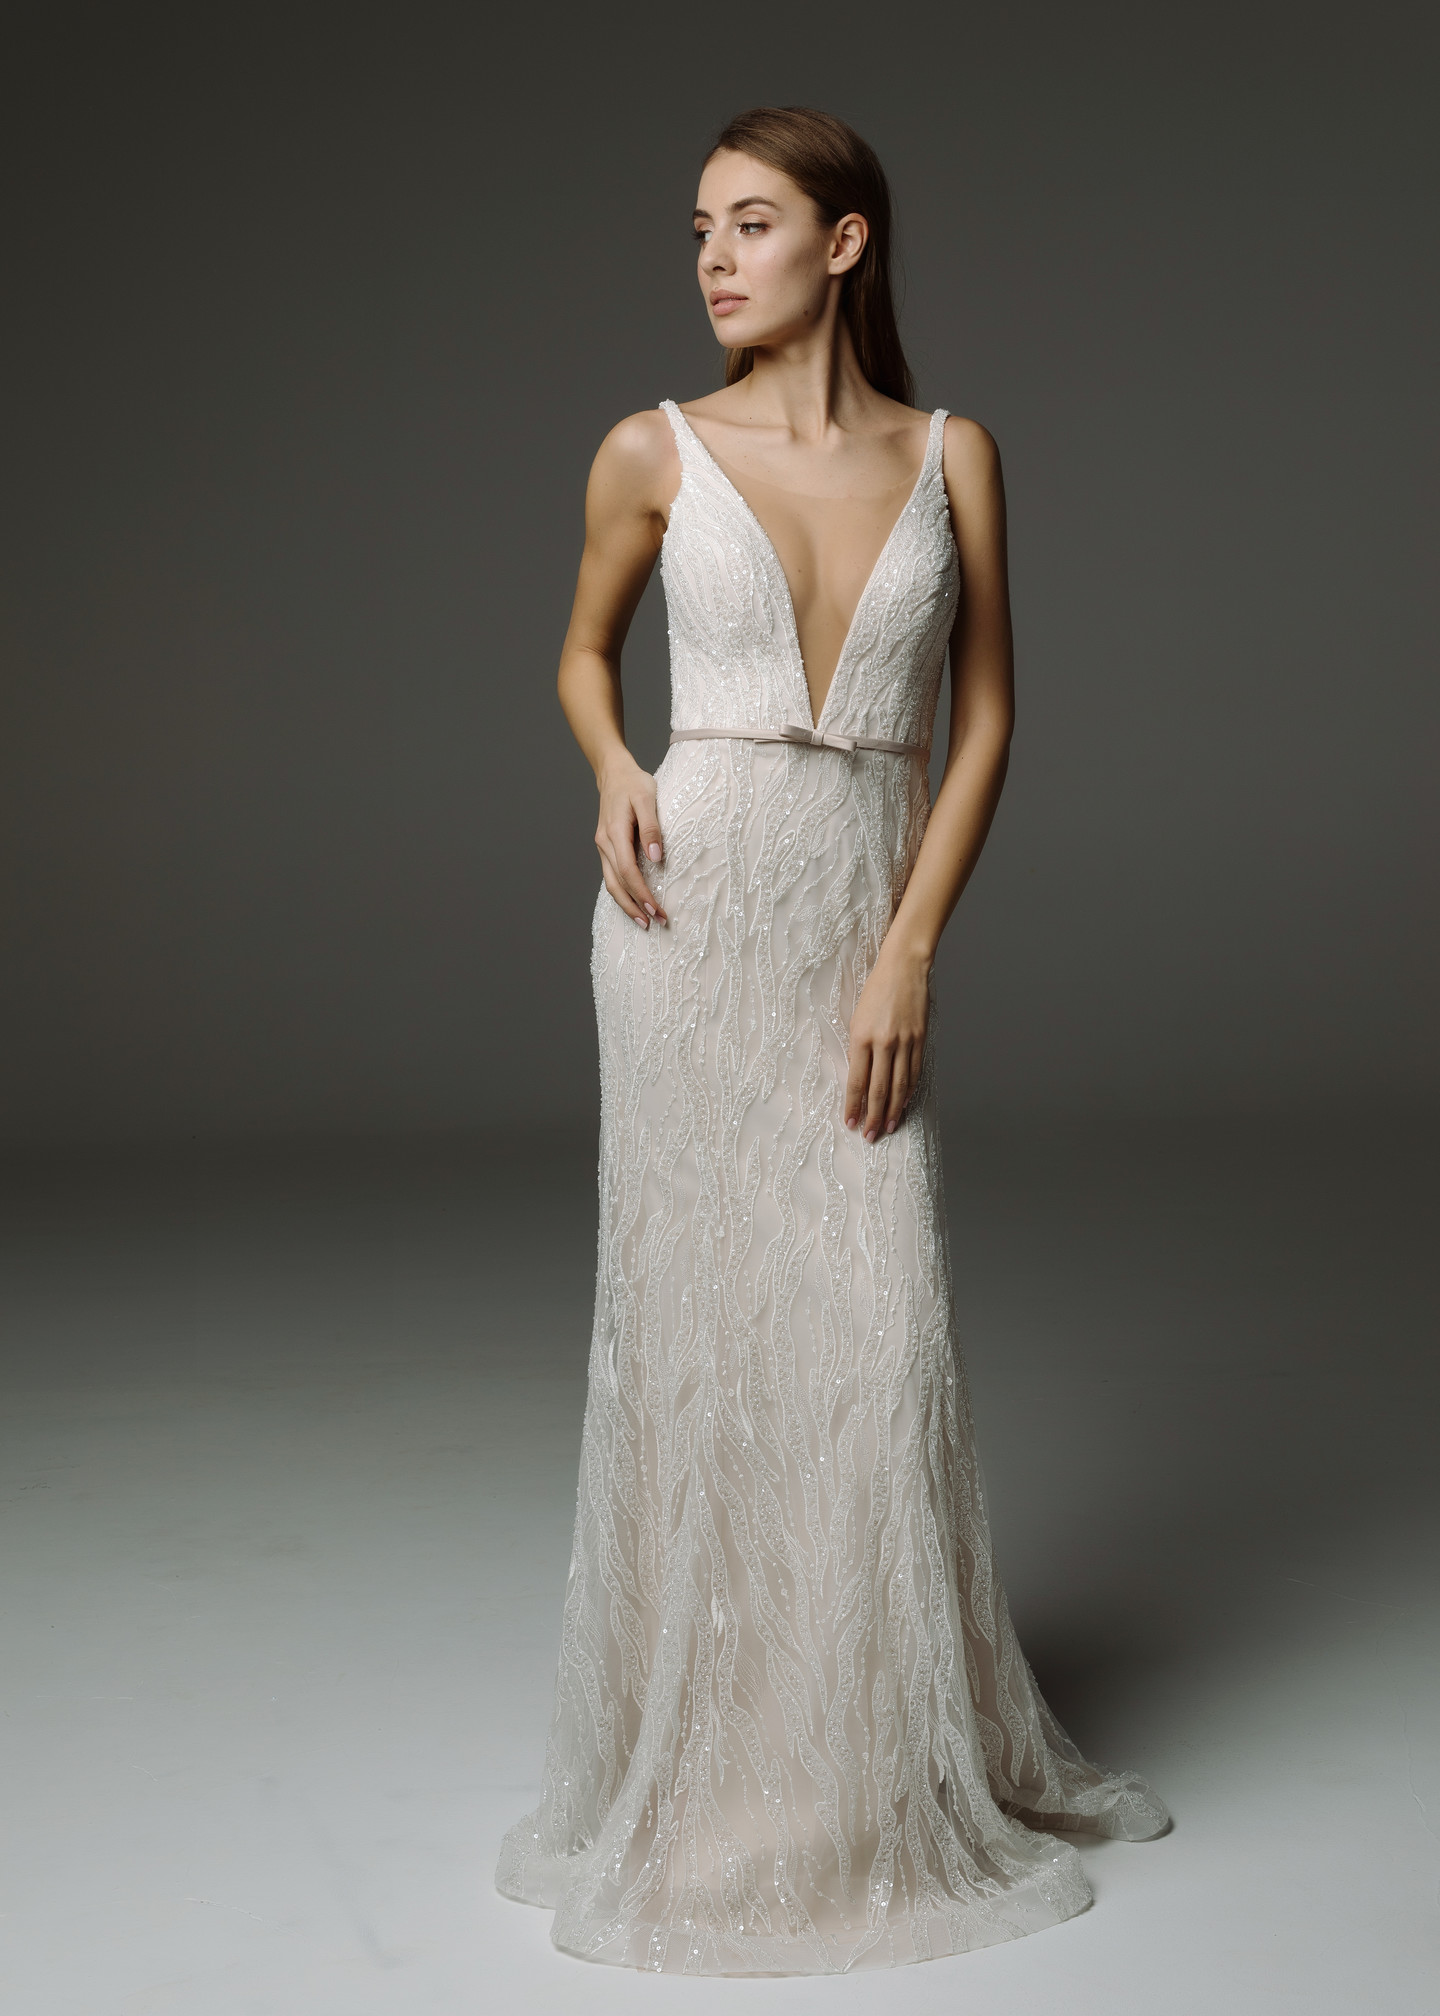 Chantal gown, 2019, couture, dress, bridal, powder color, lace, mermaid, archive